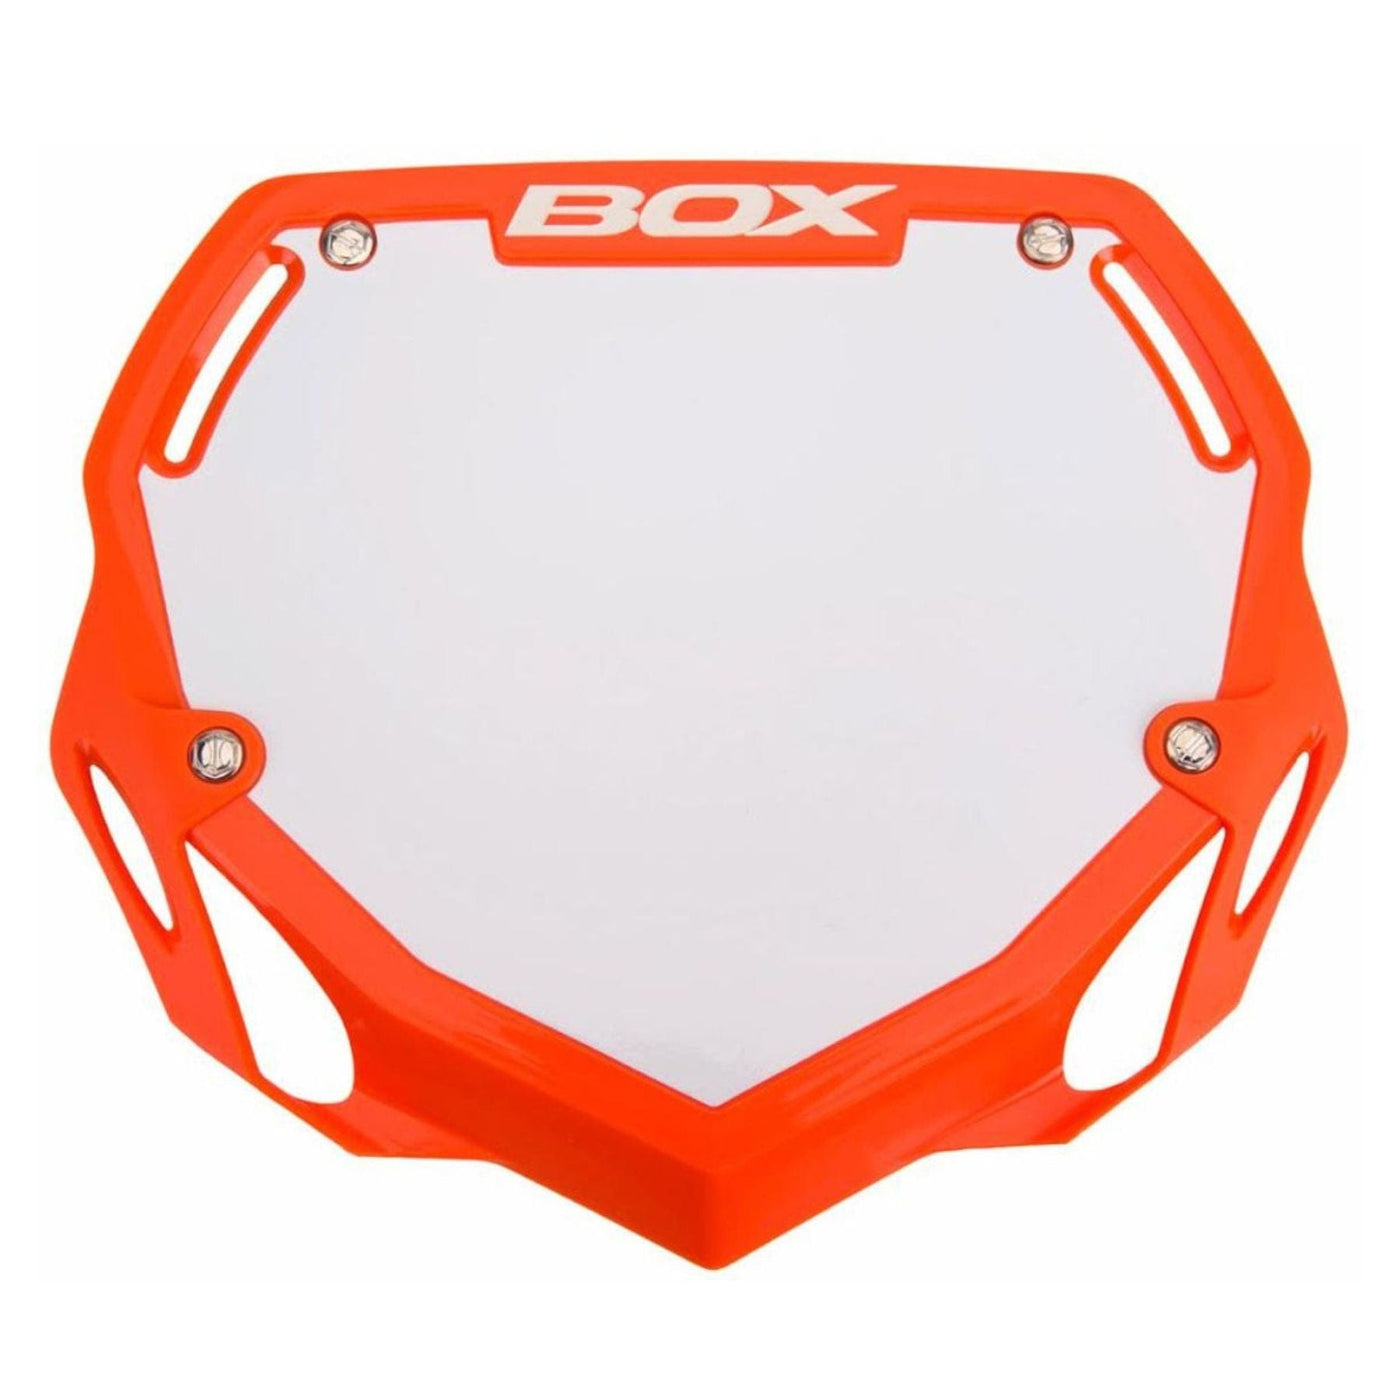 Box One BMX Racing Number Plate - Orange - Large